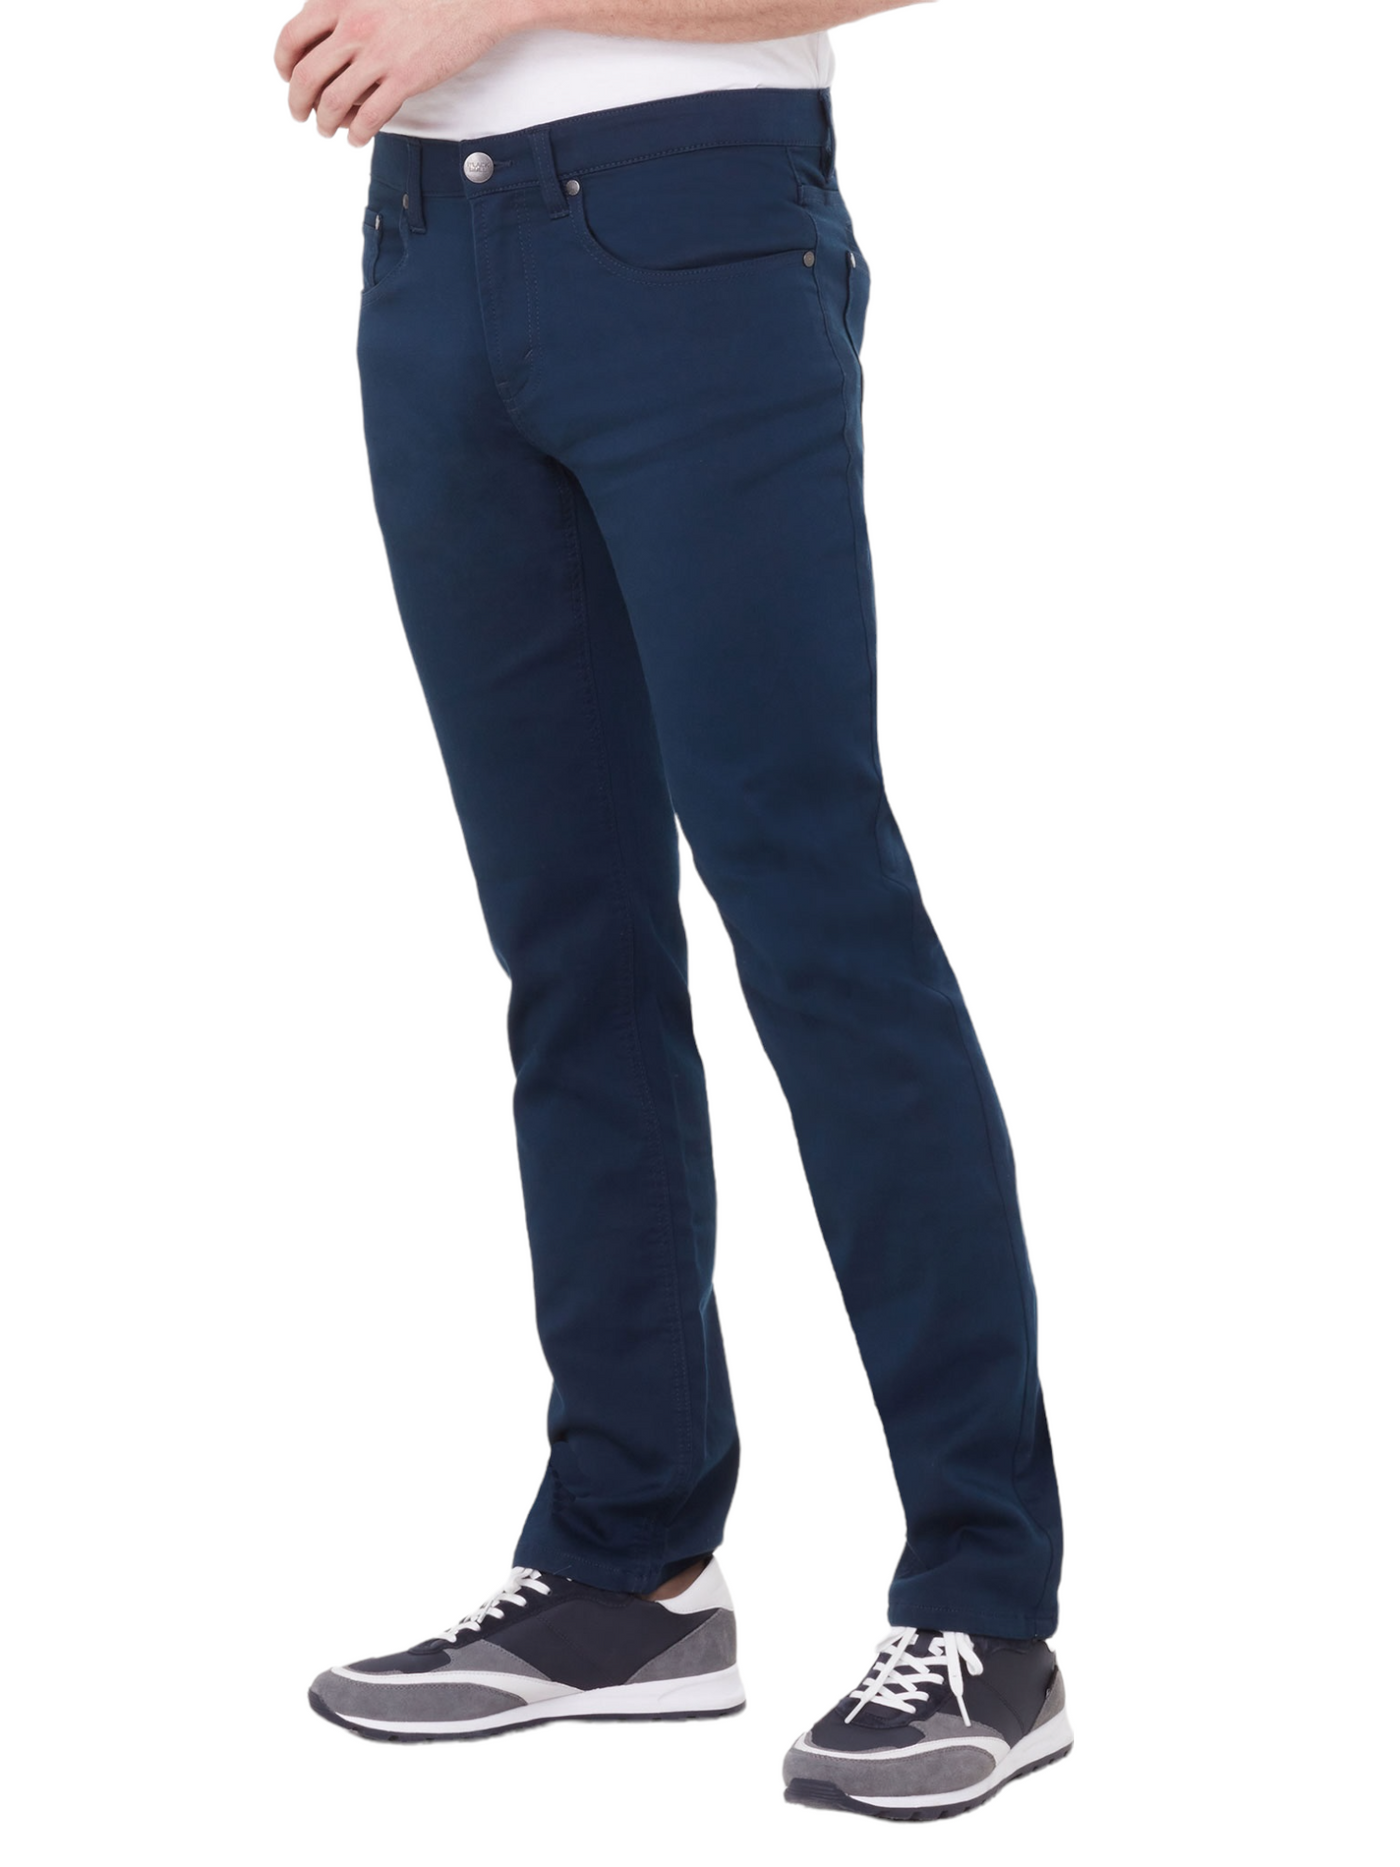 Pantalon de coton extensible marine coupe semi-ajustée